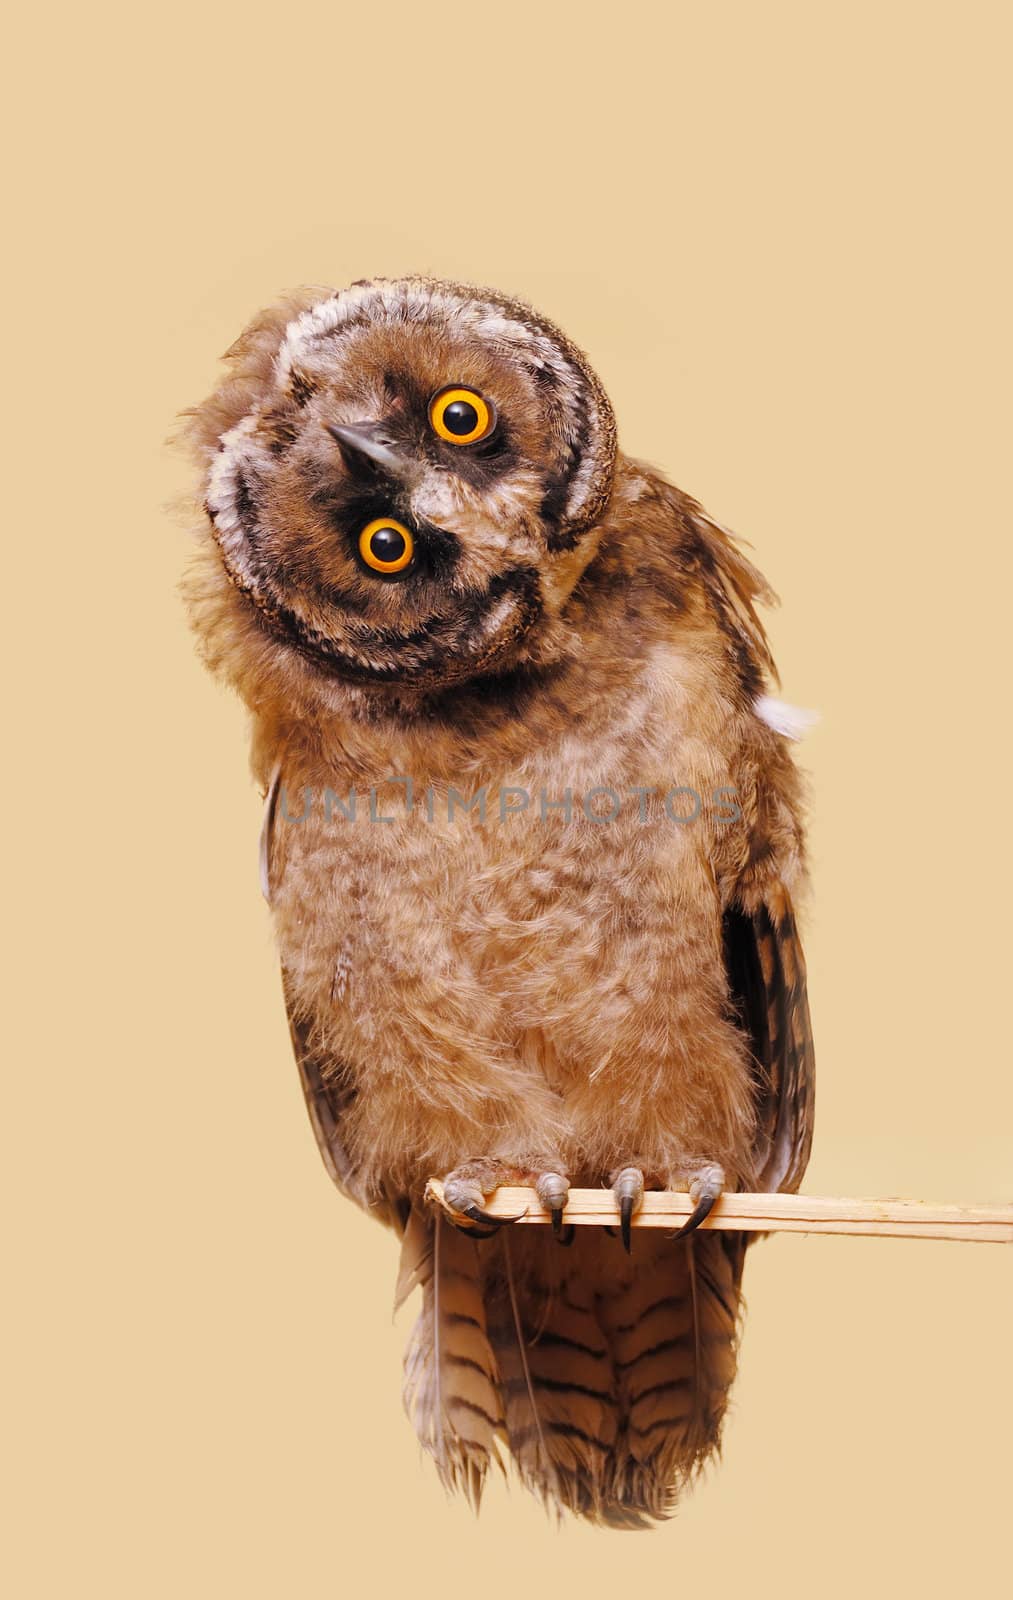 Funny owl by whitechild